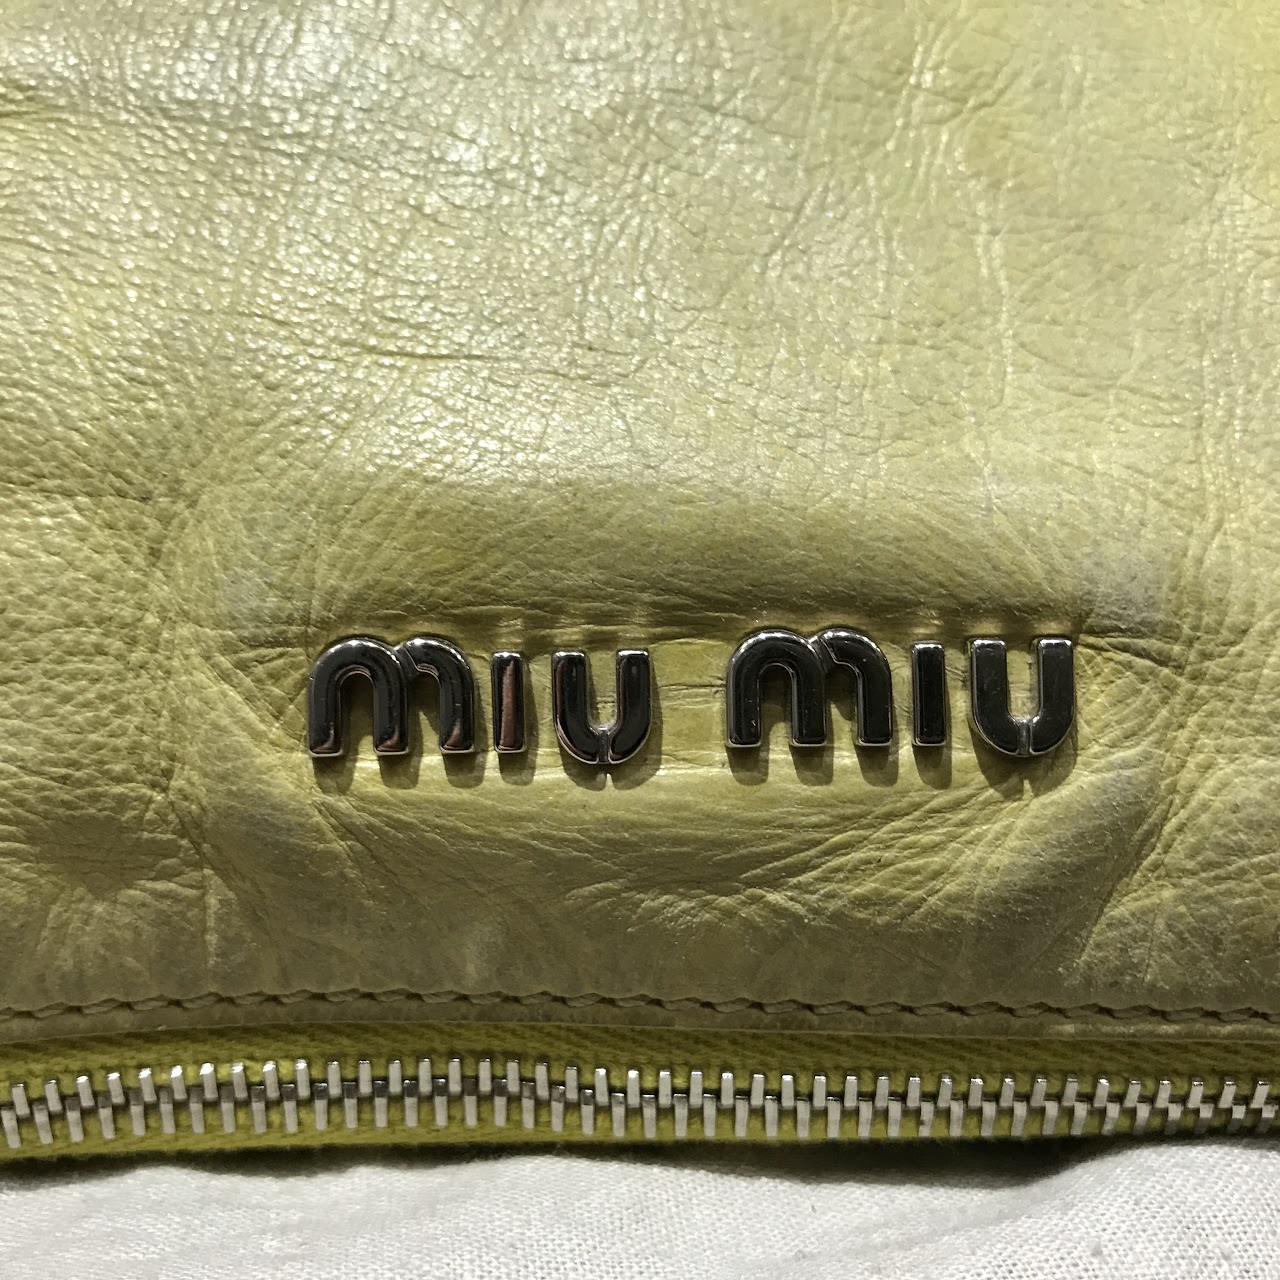 Miu Miu Hobo Bag